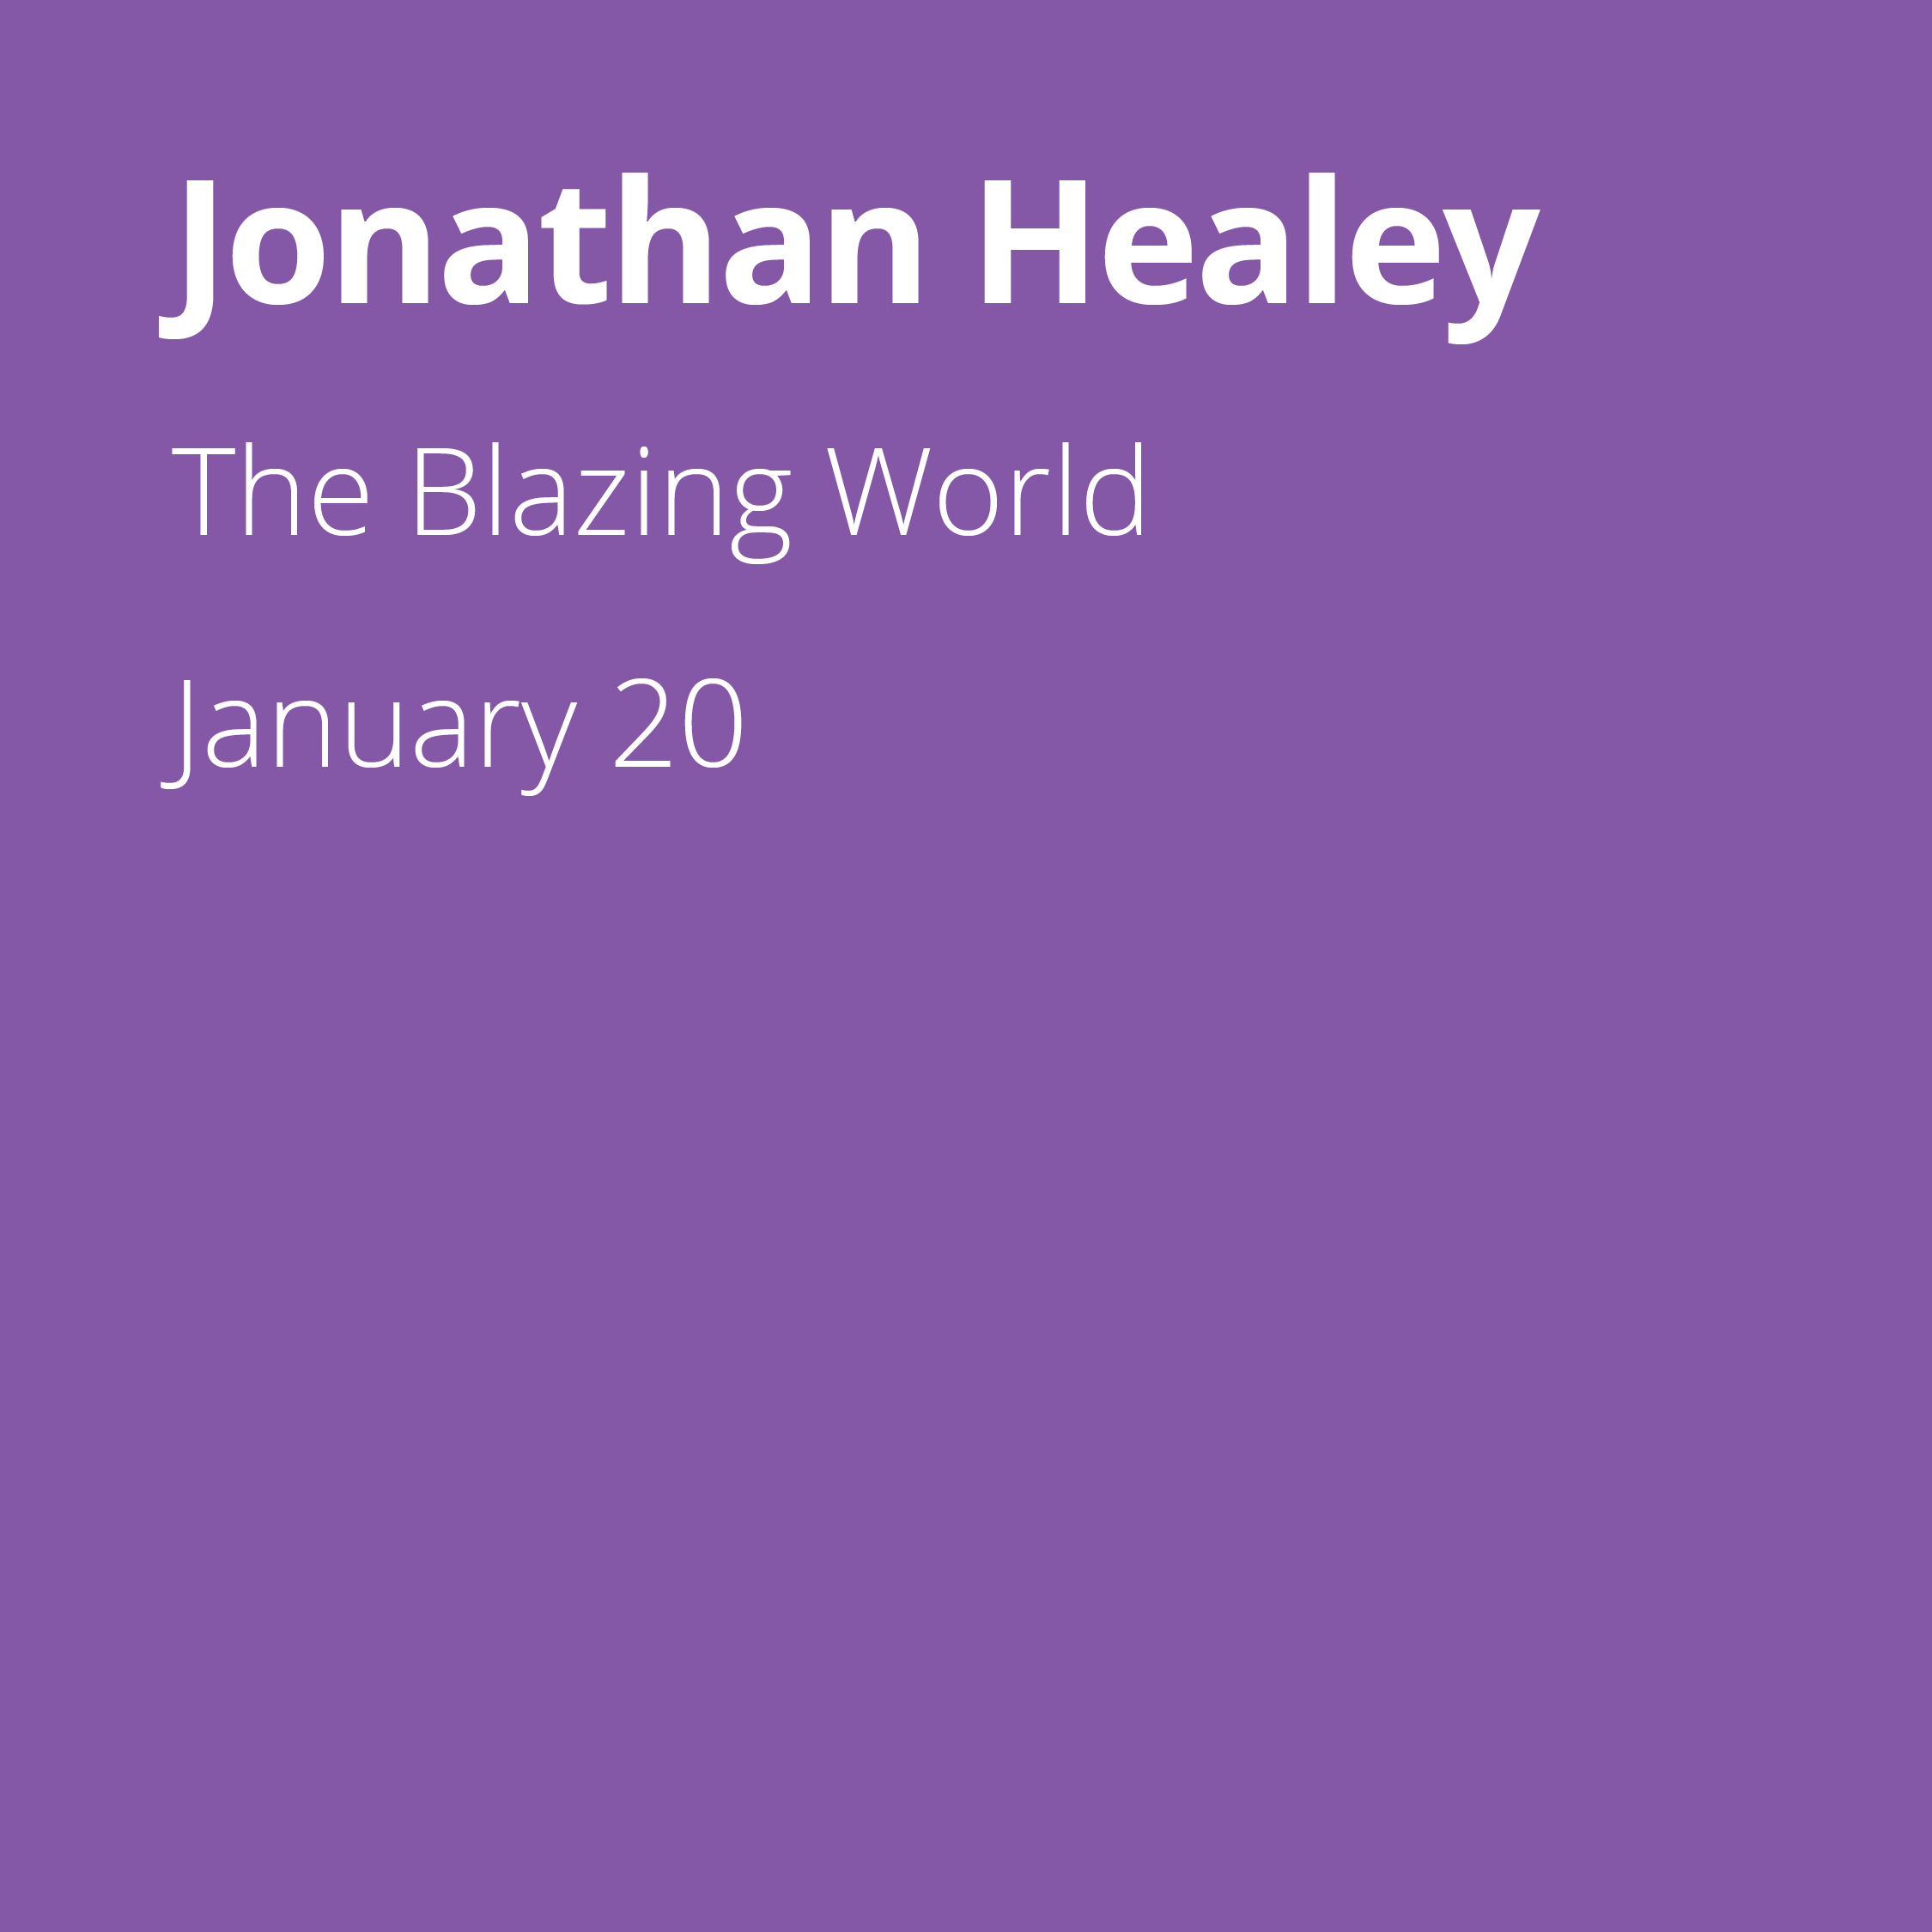 Jonathan Healey